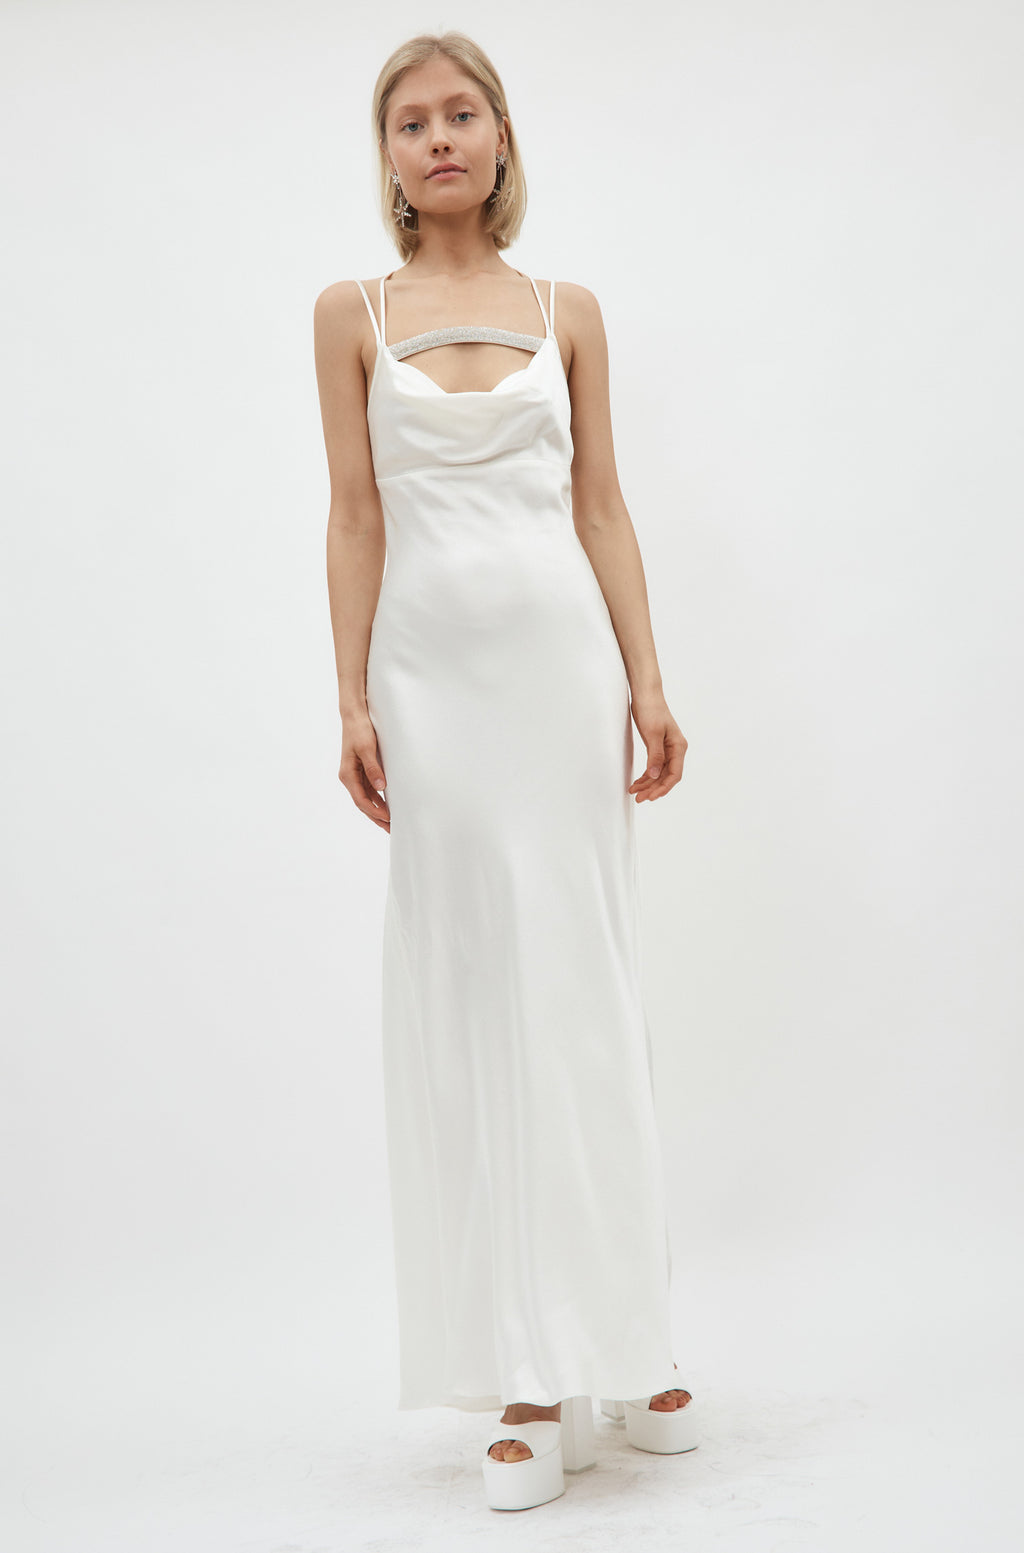 Venus White Dress